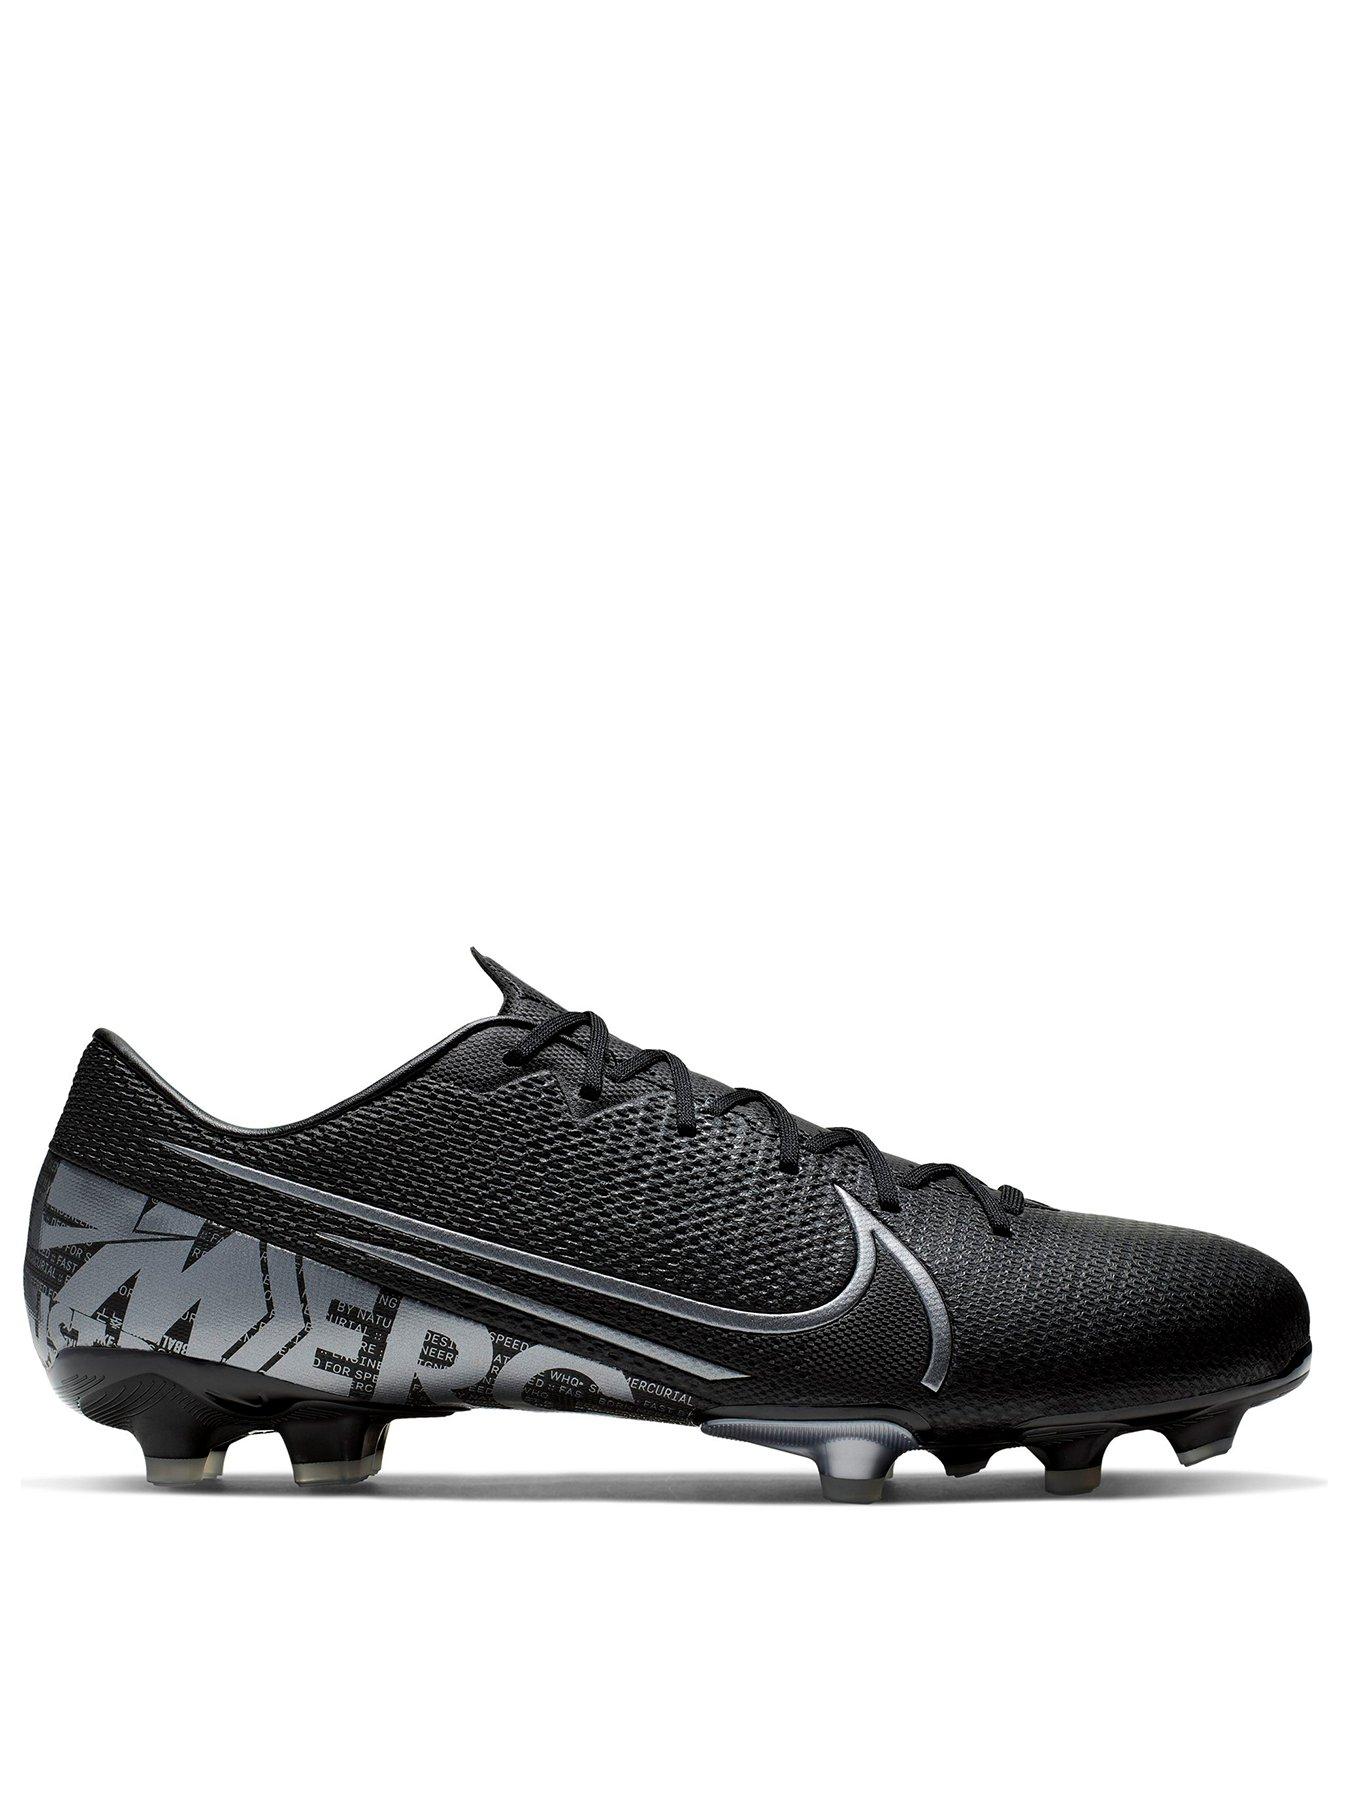 Cheap Nike HypervenomX Proximo TF Soccer Shoes Black